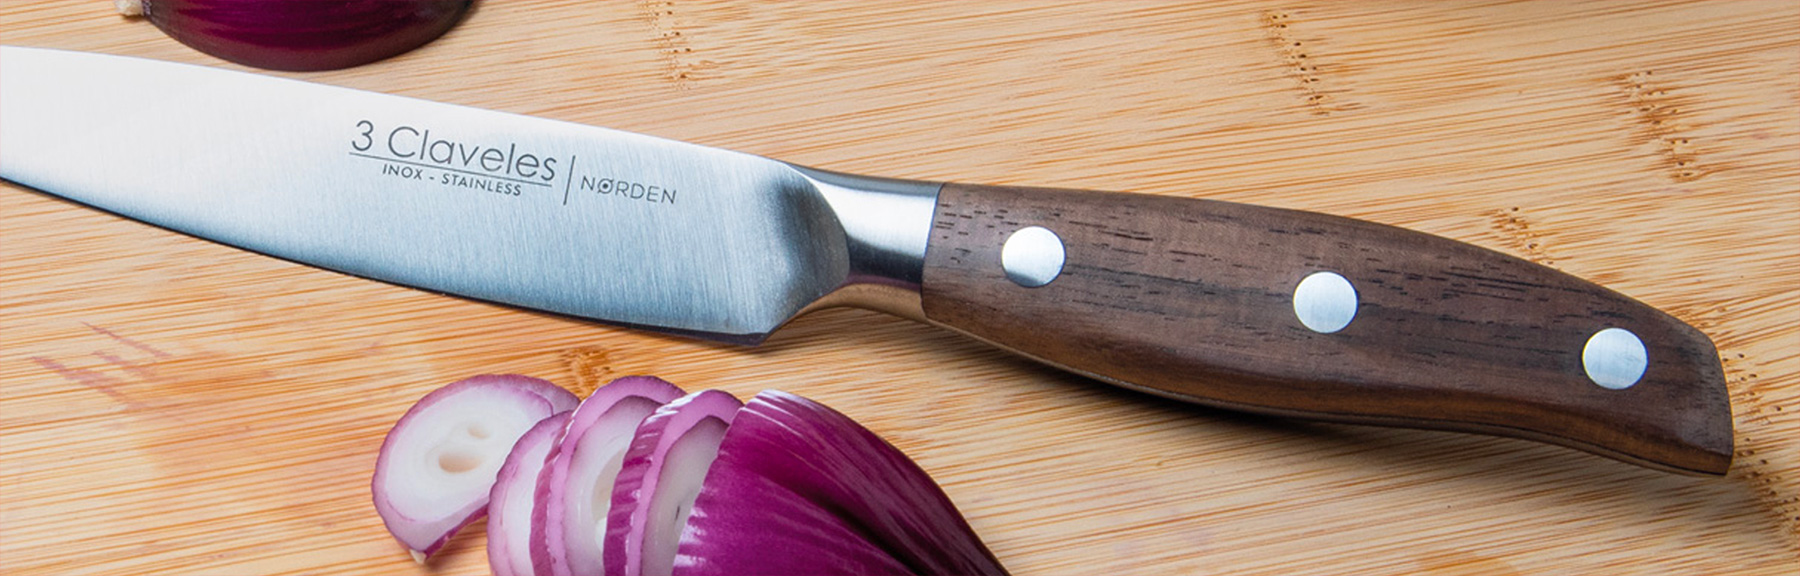 Wood handle 3 Claveles knives